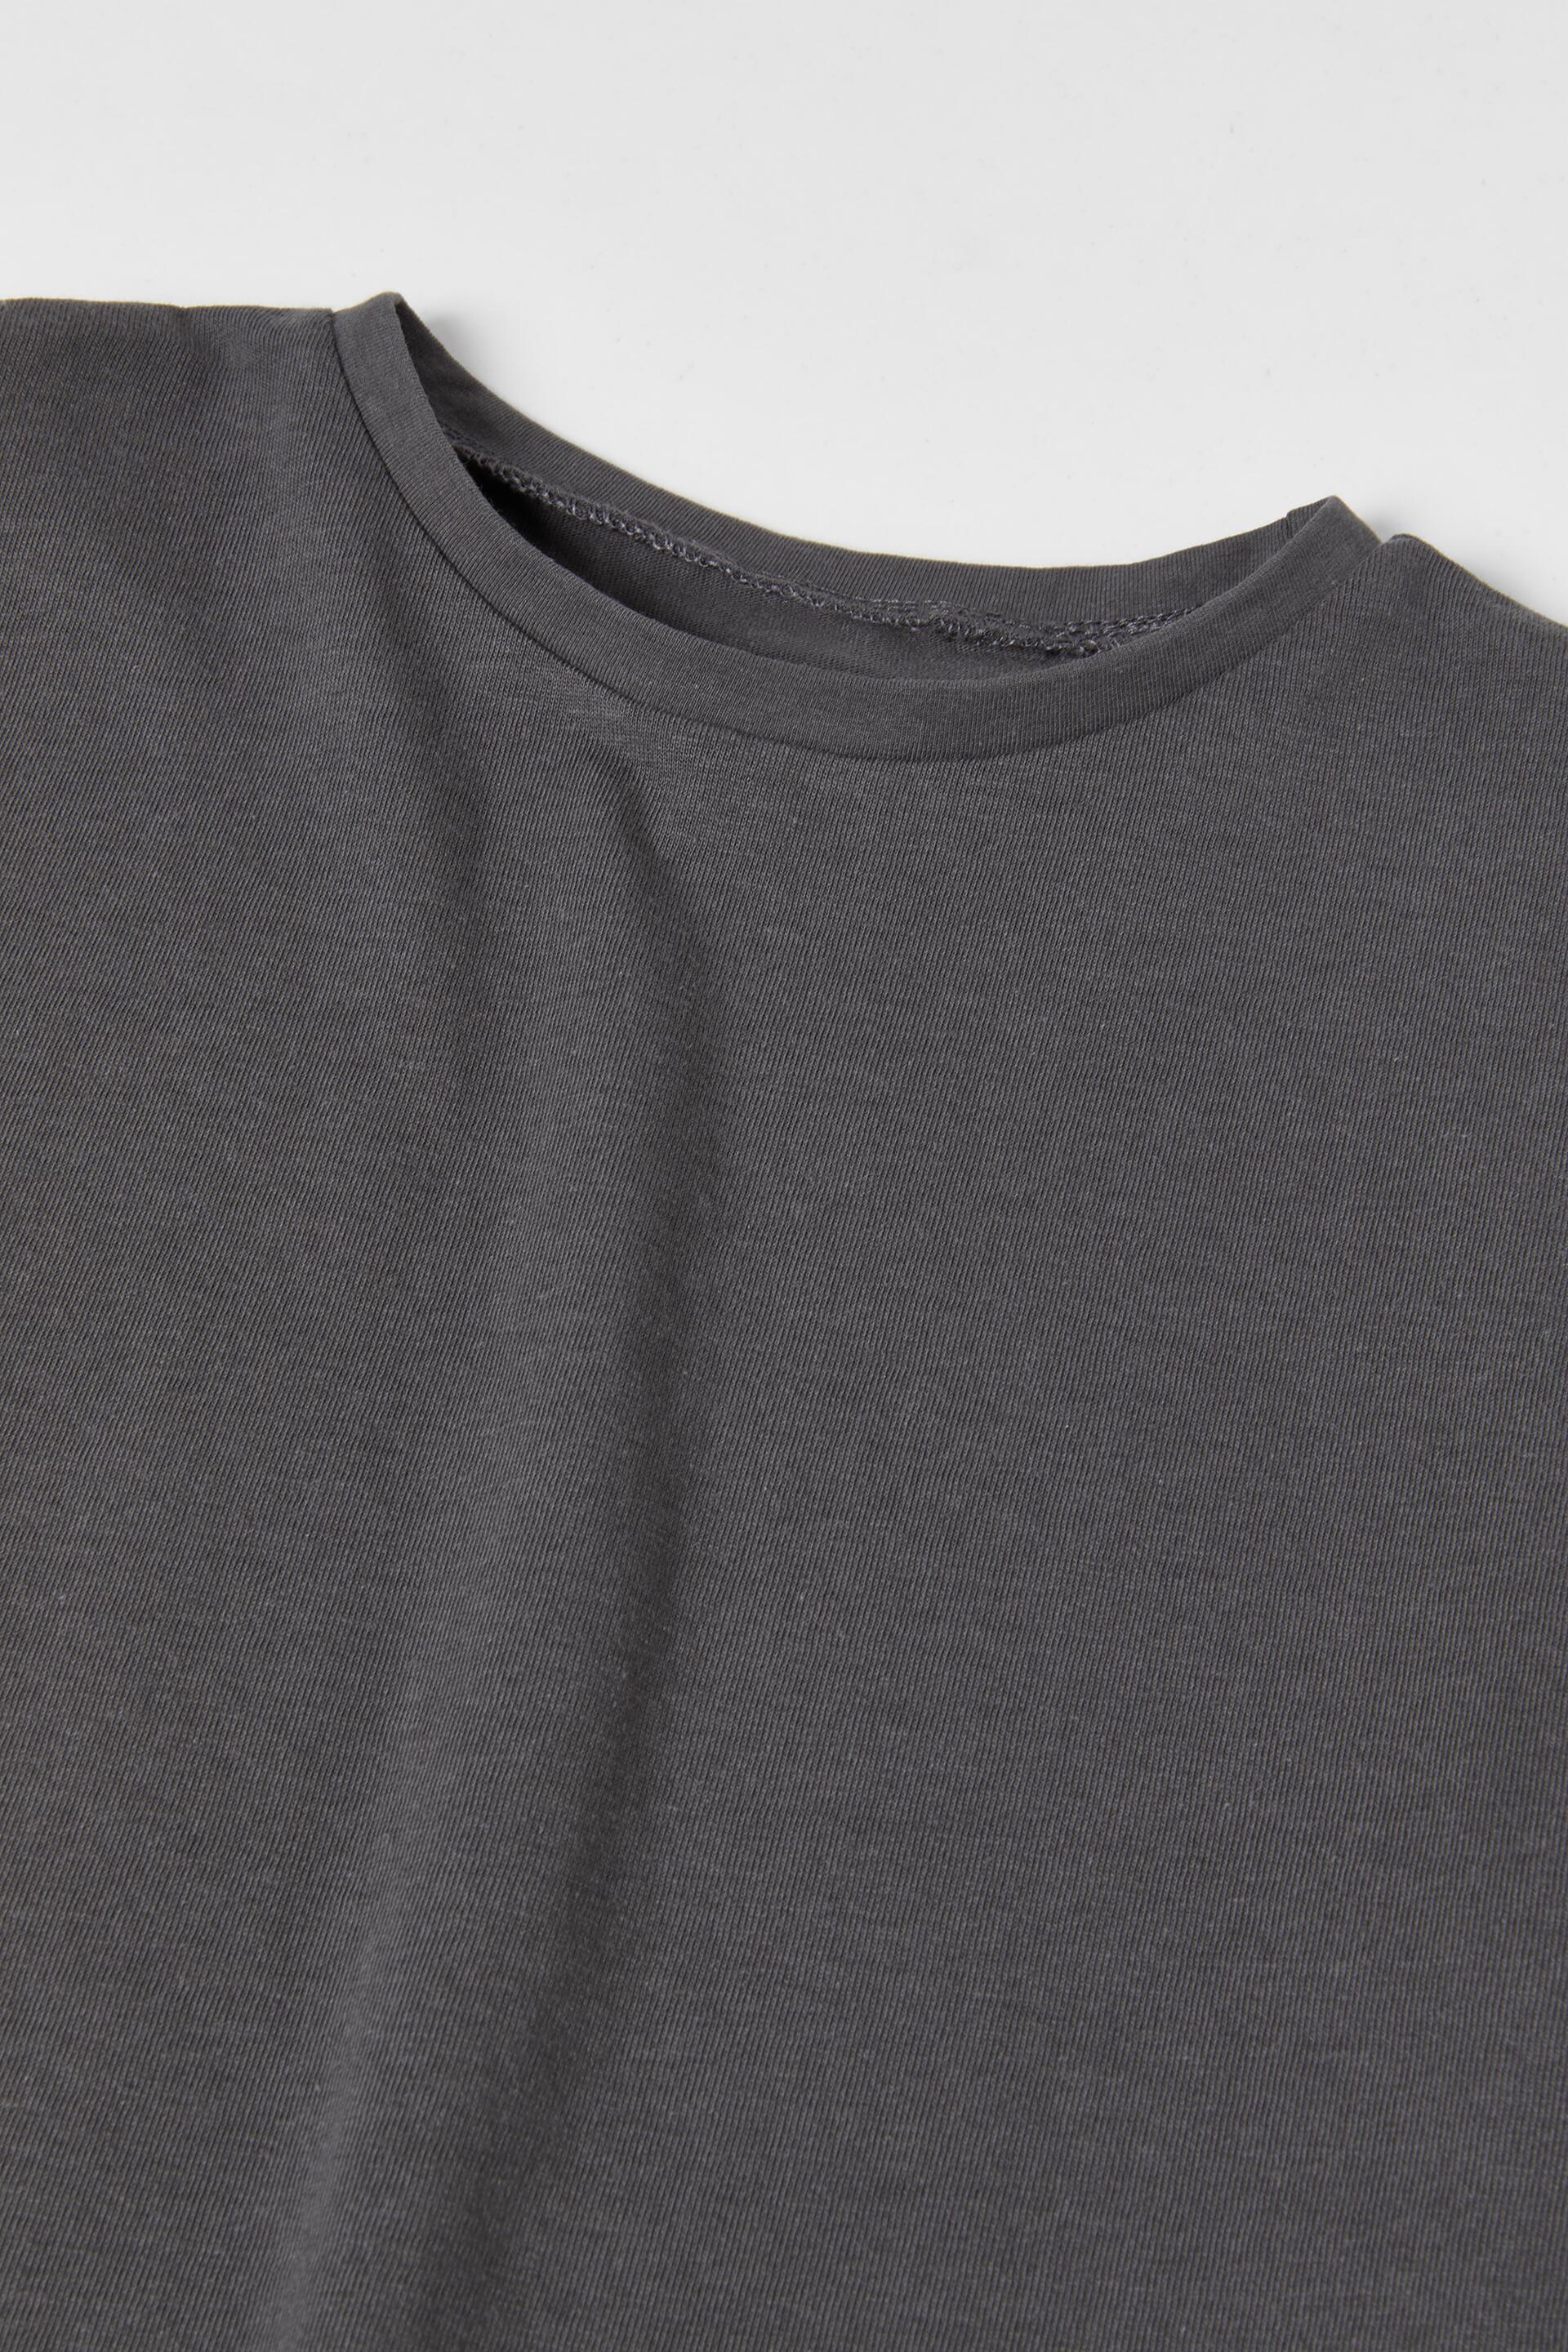 Zara Plain T-Shirt - Big Apple Buddy